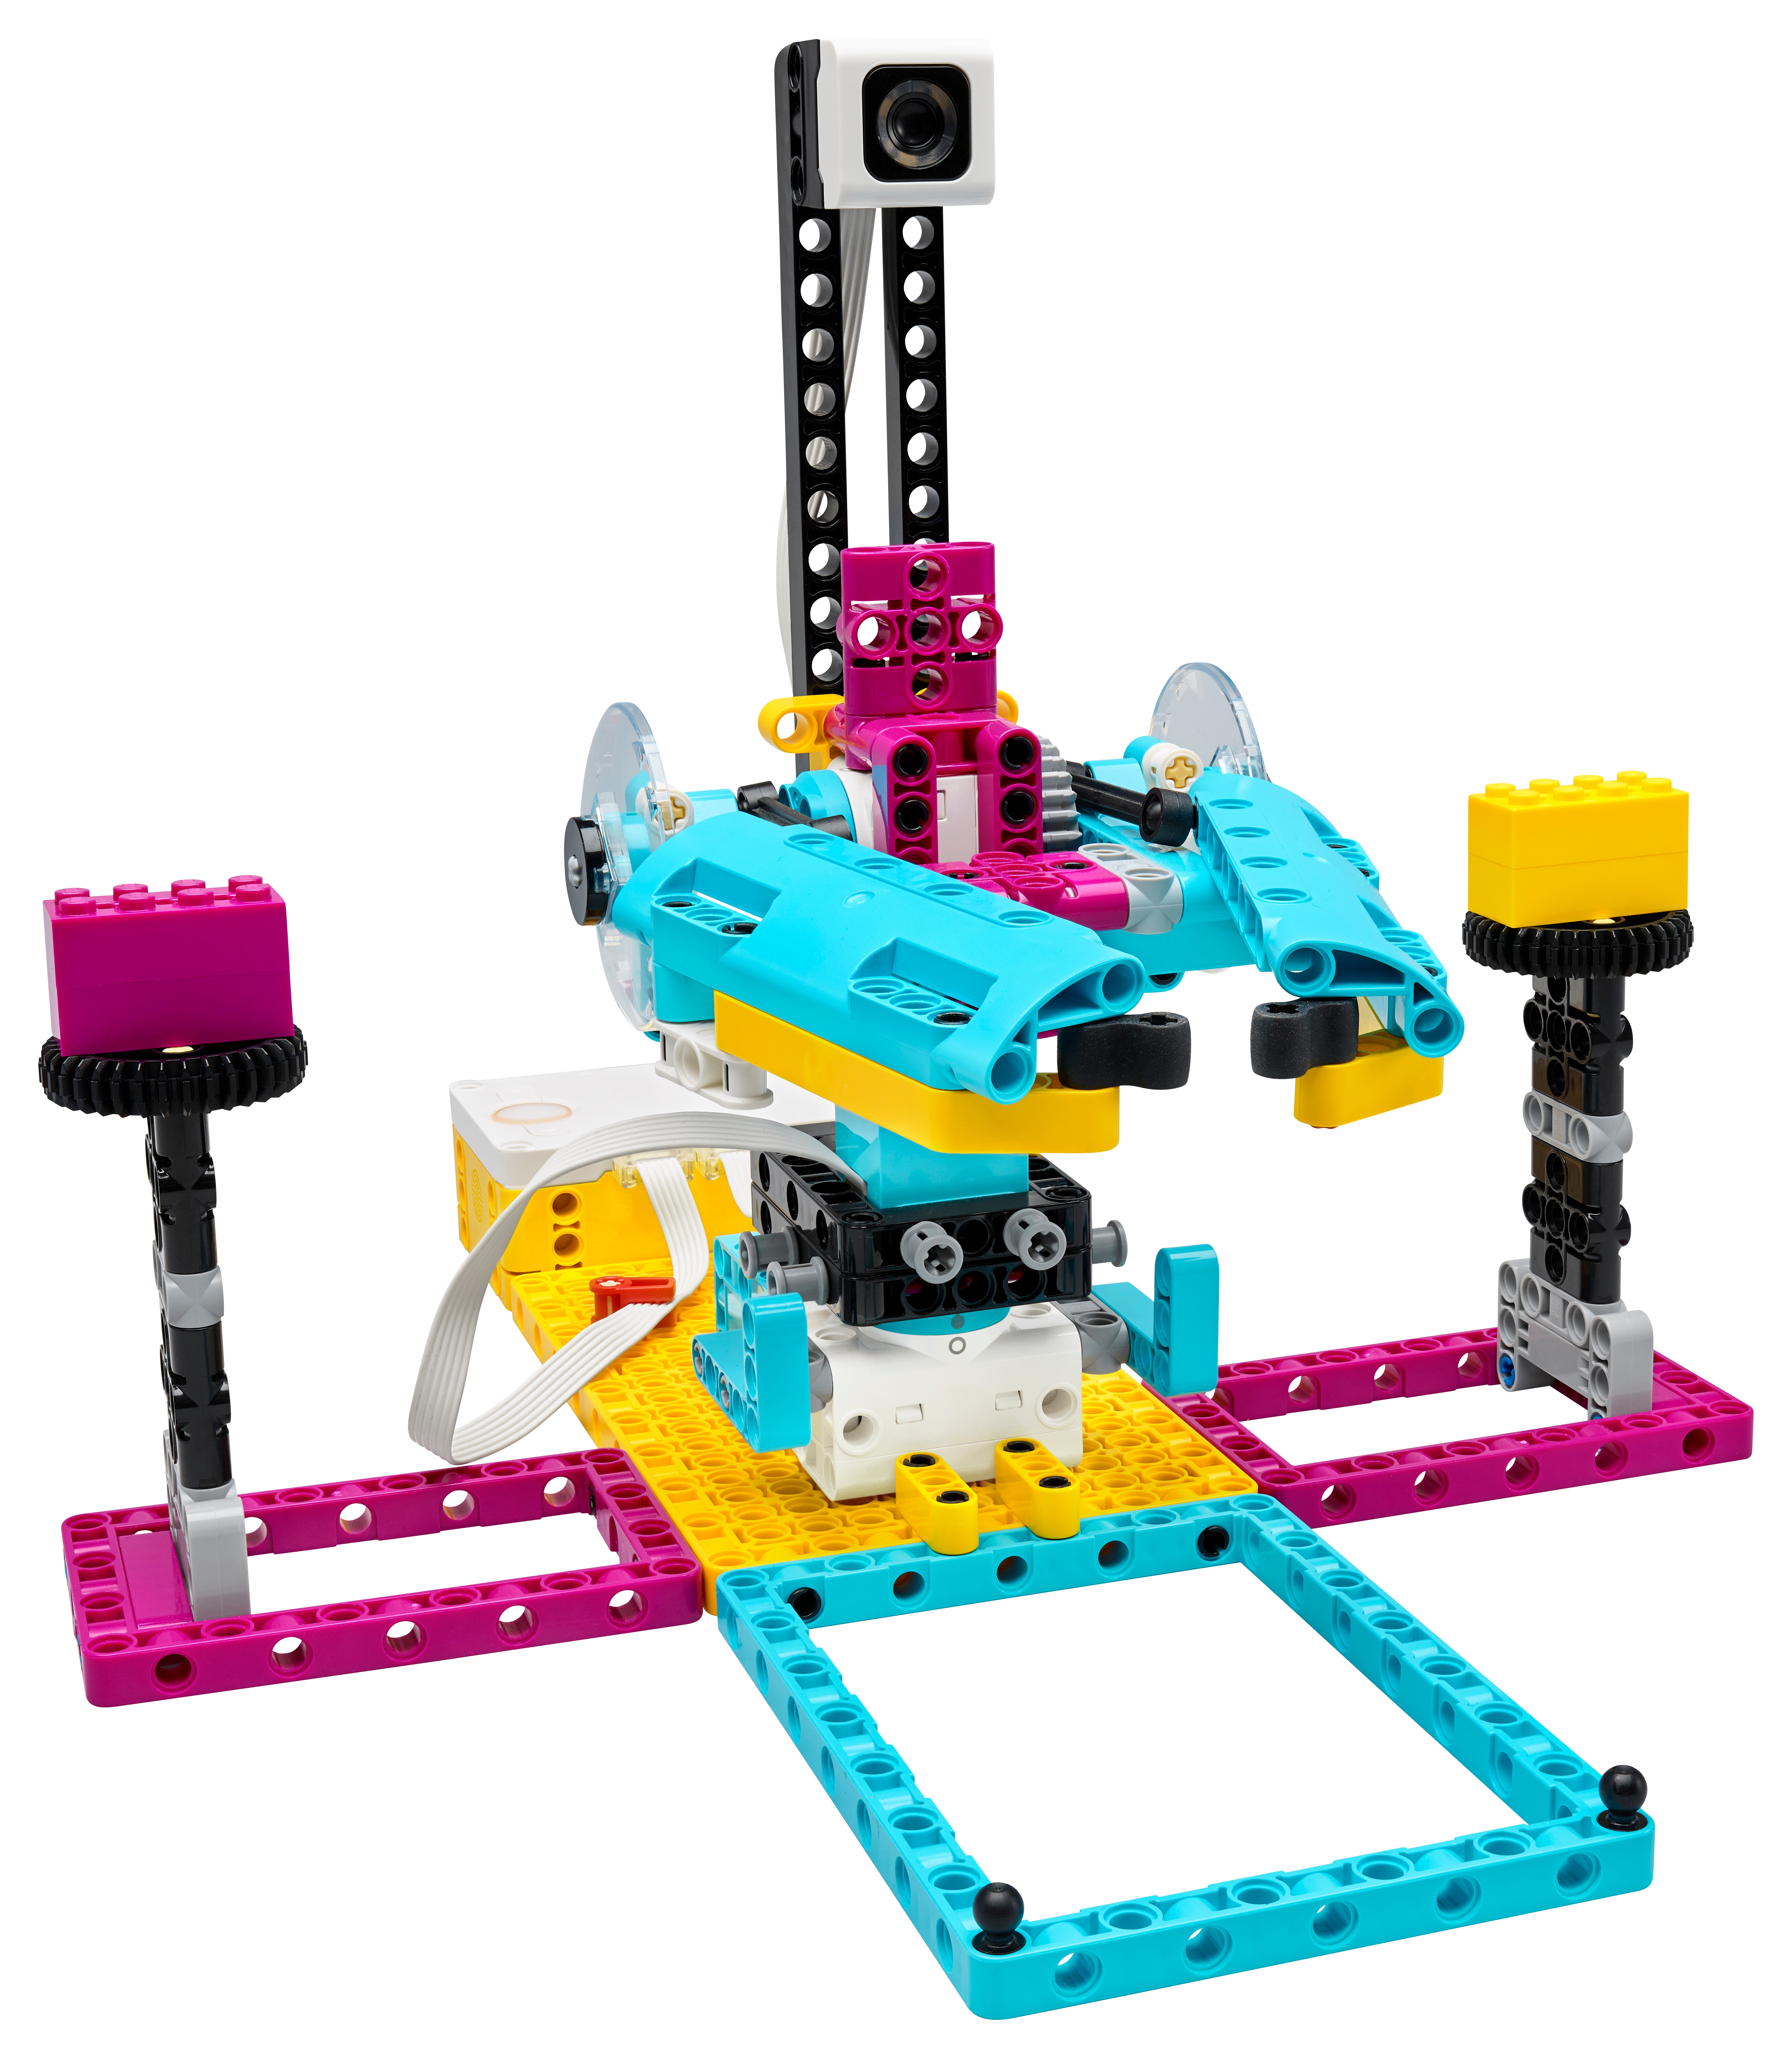 LEGO education Spike Prime (型番45678)-